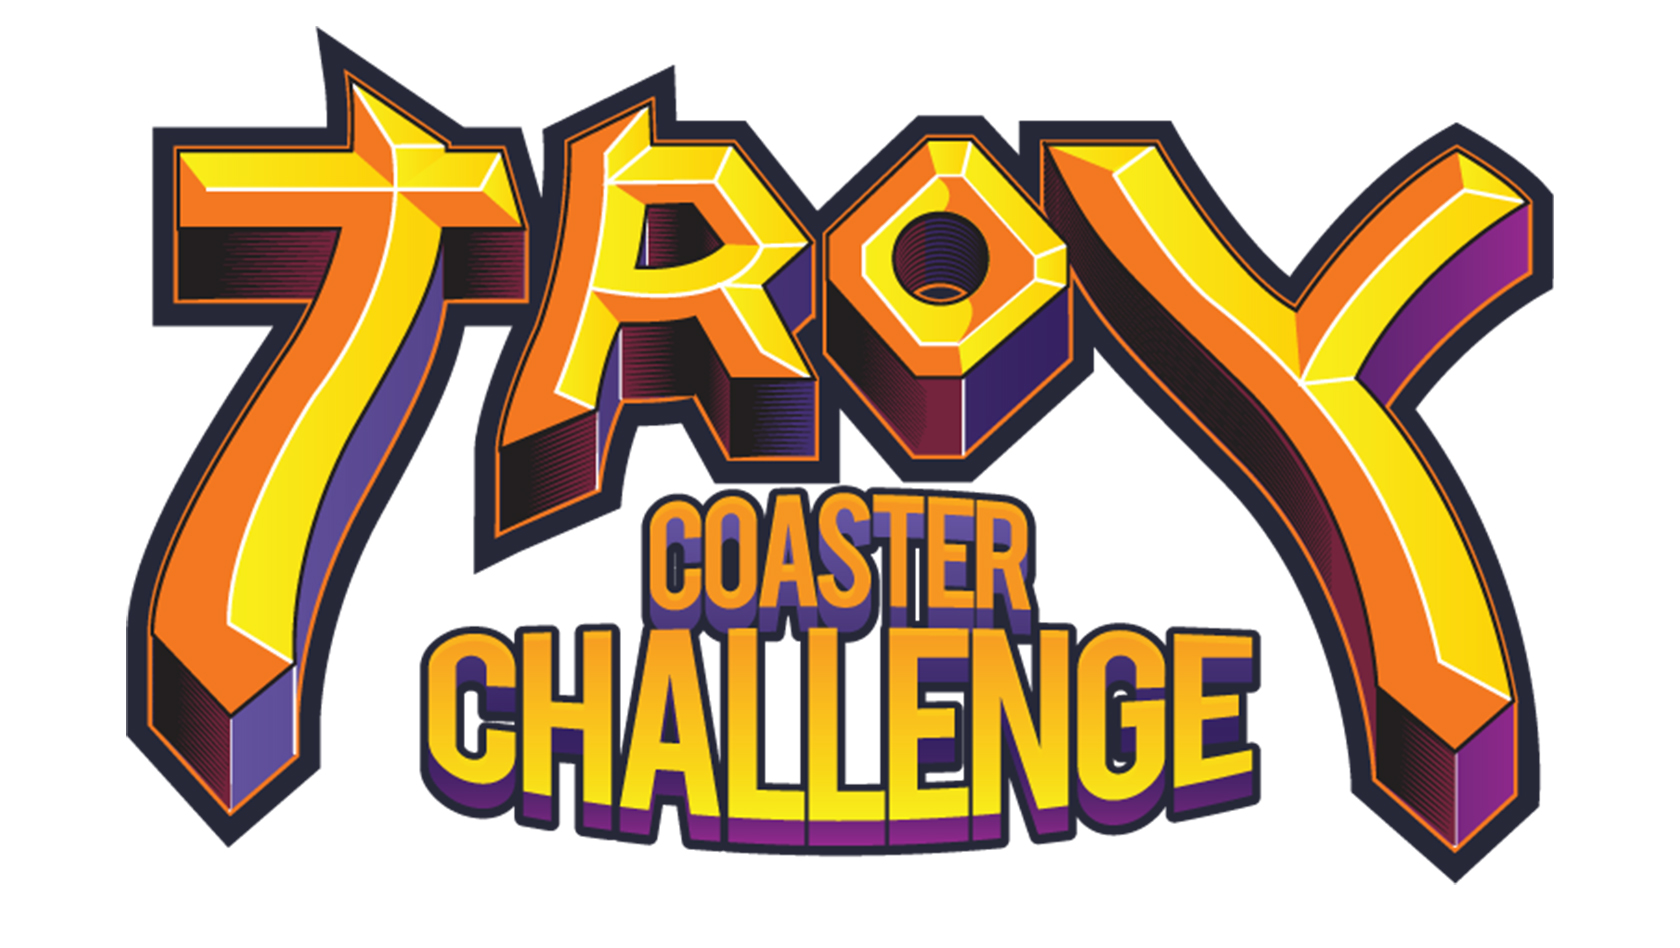 Troy Challenge im Toverland